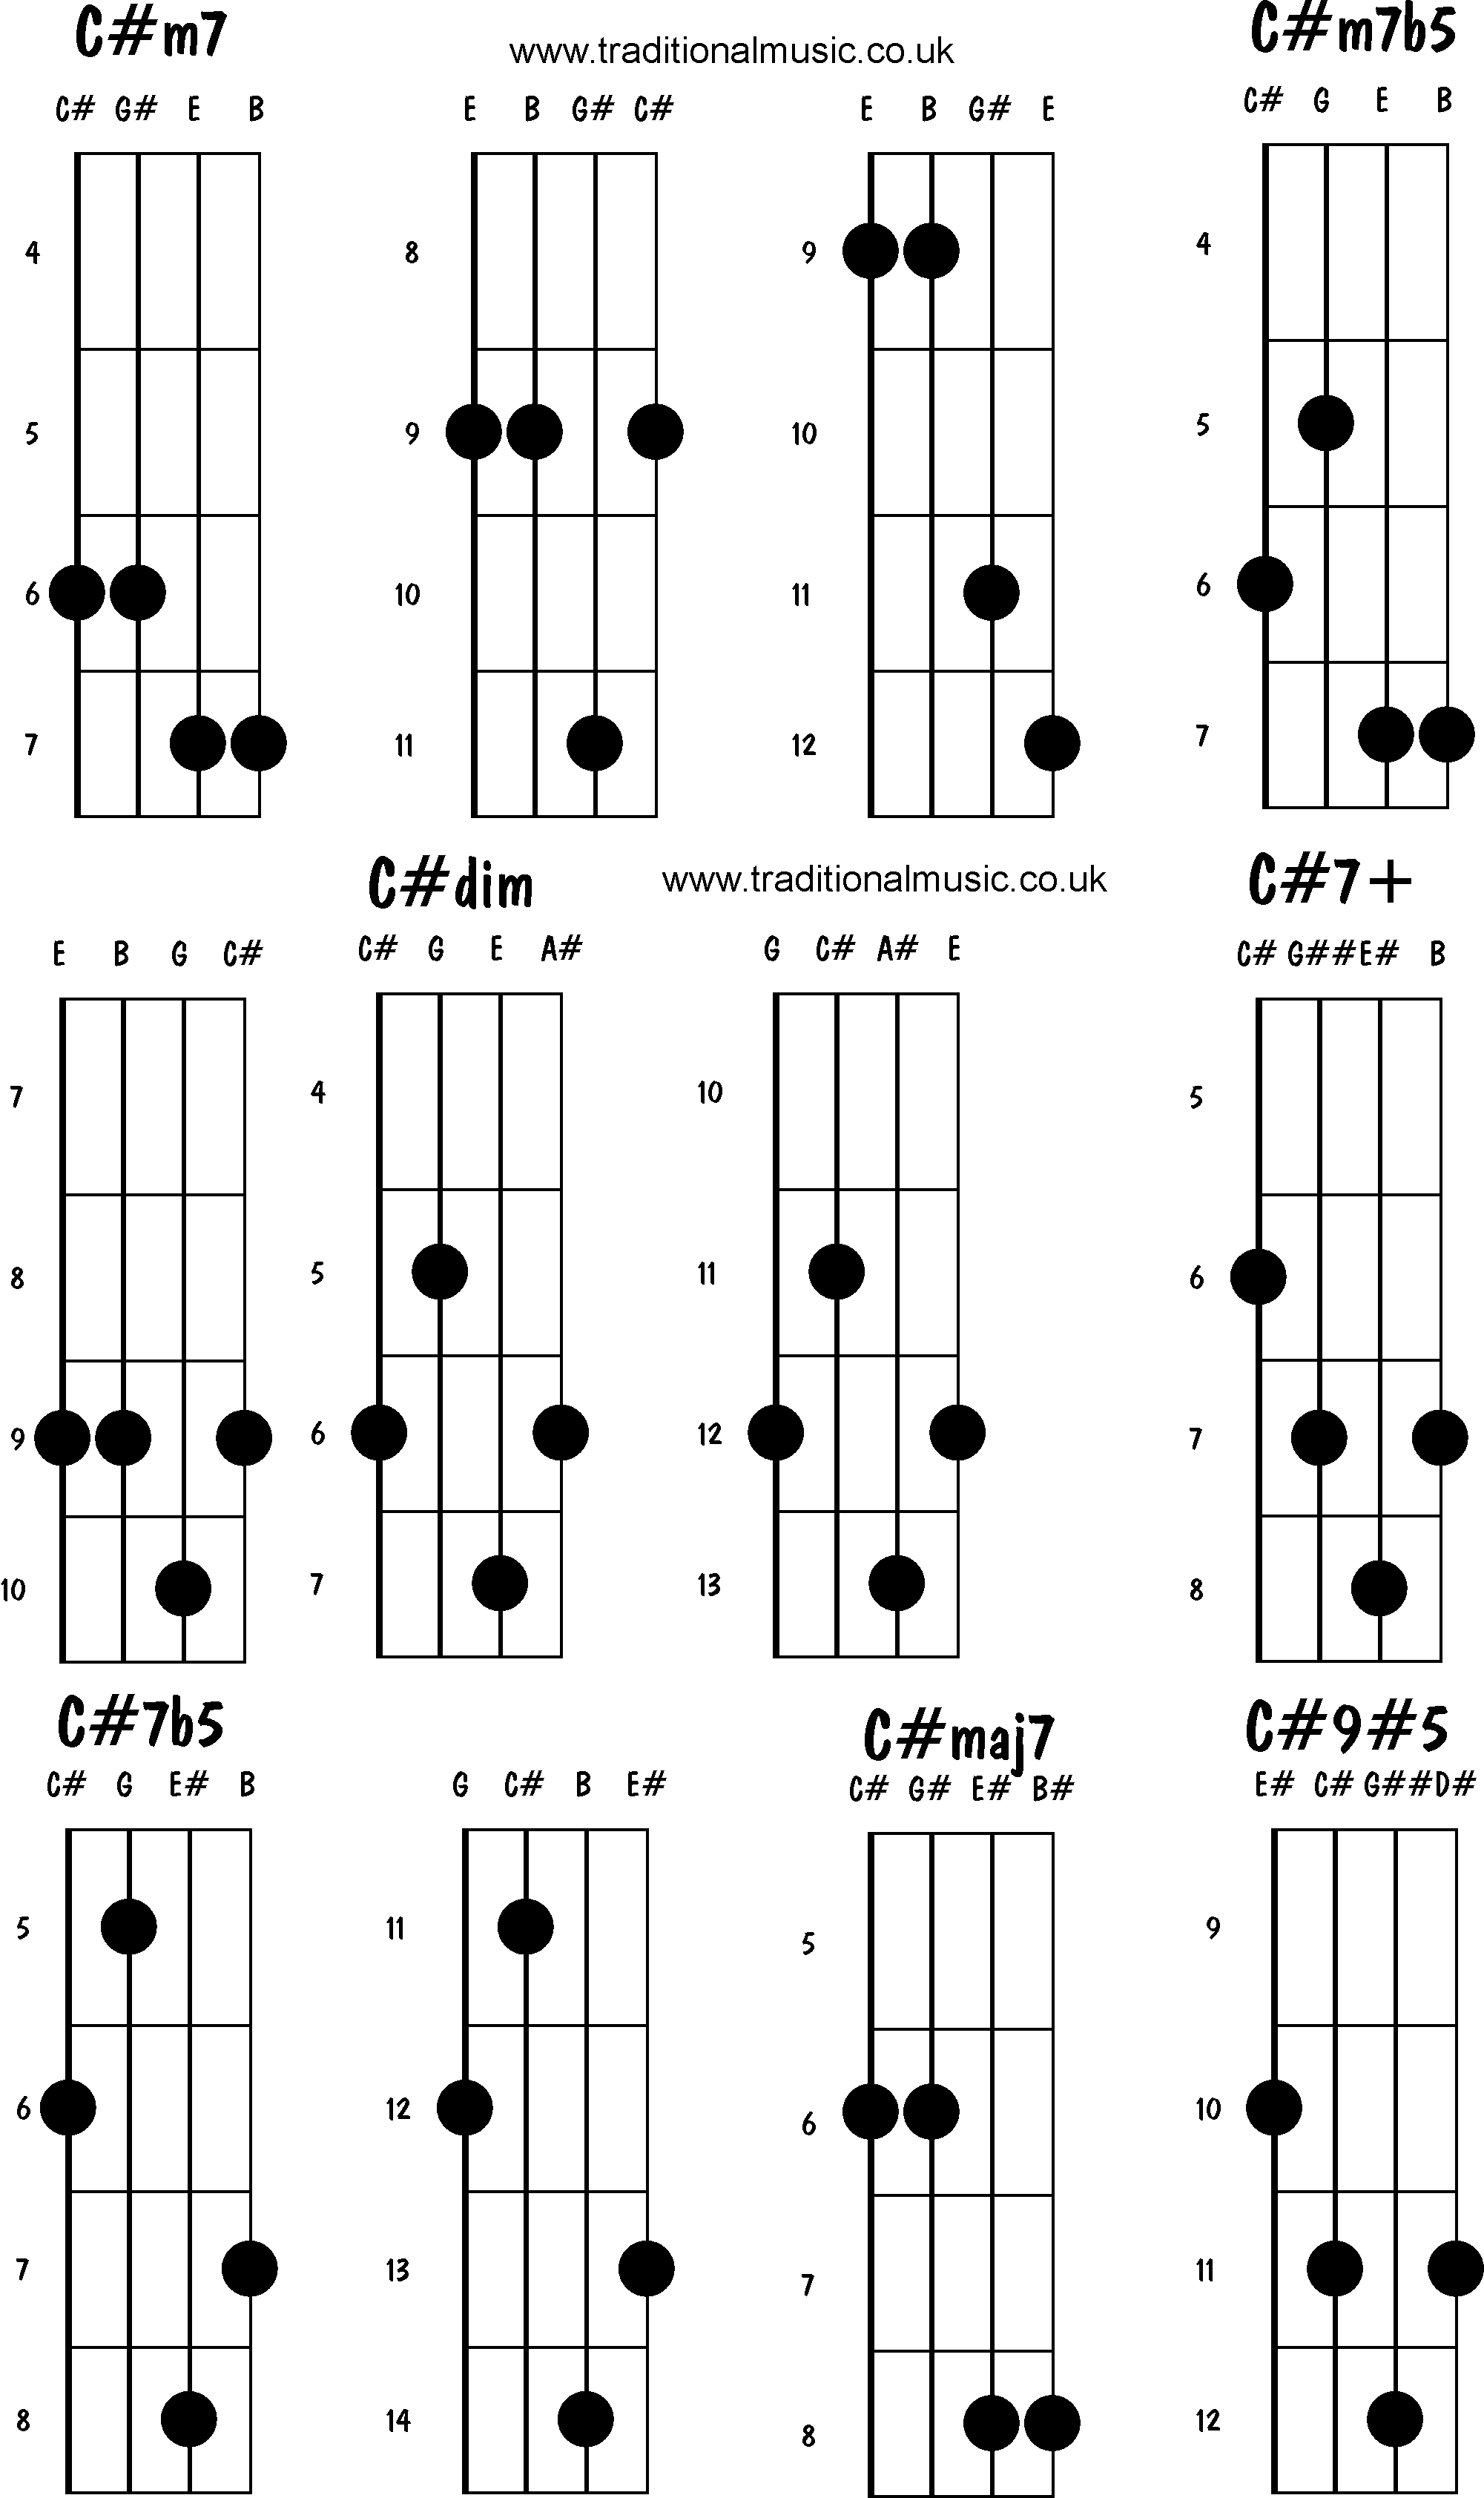 Mandolin Chords Advanced Cm7 Cm7b5 Cdim C7 C7b5 Cmaj7 C95 